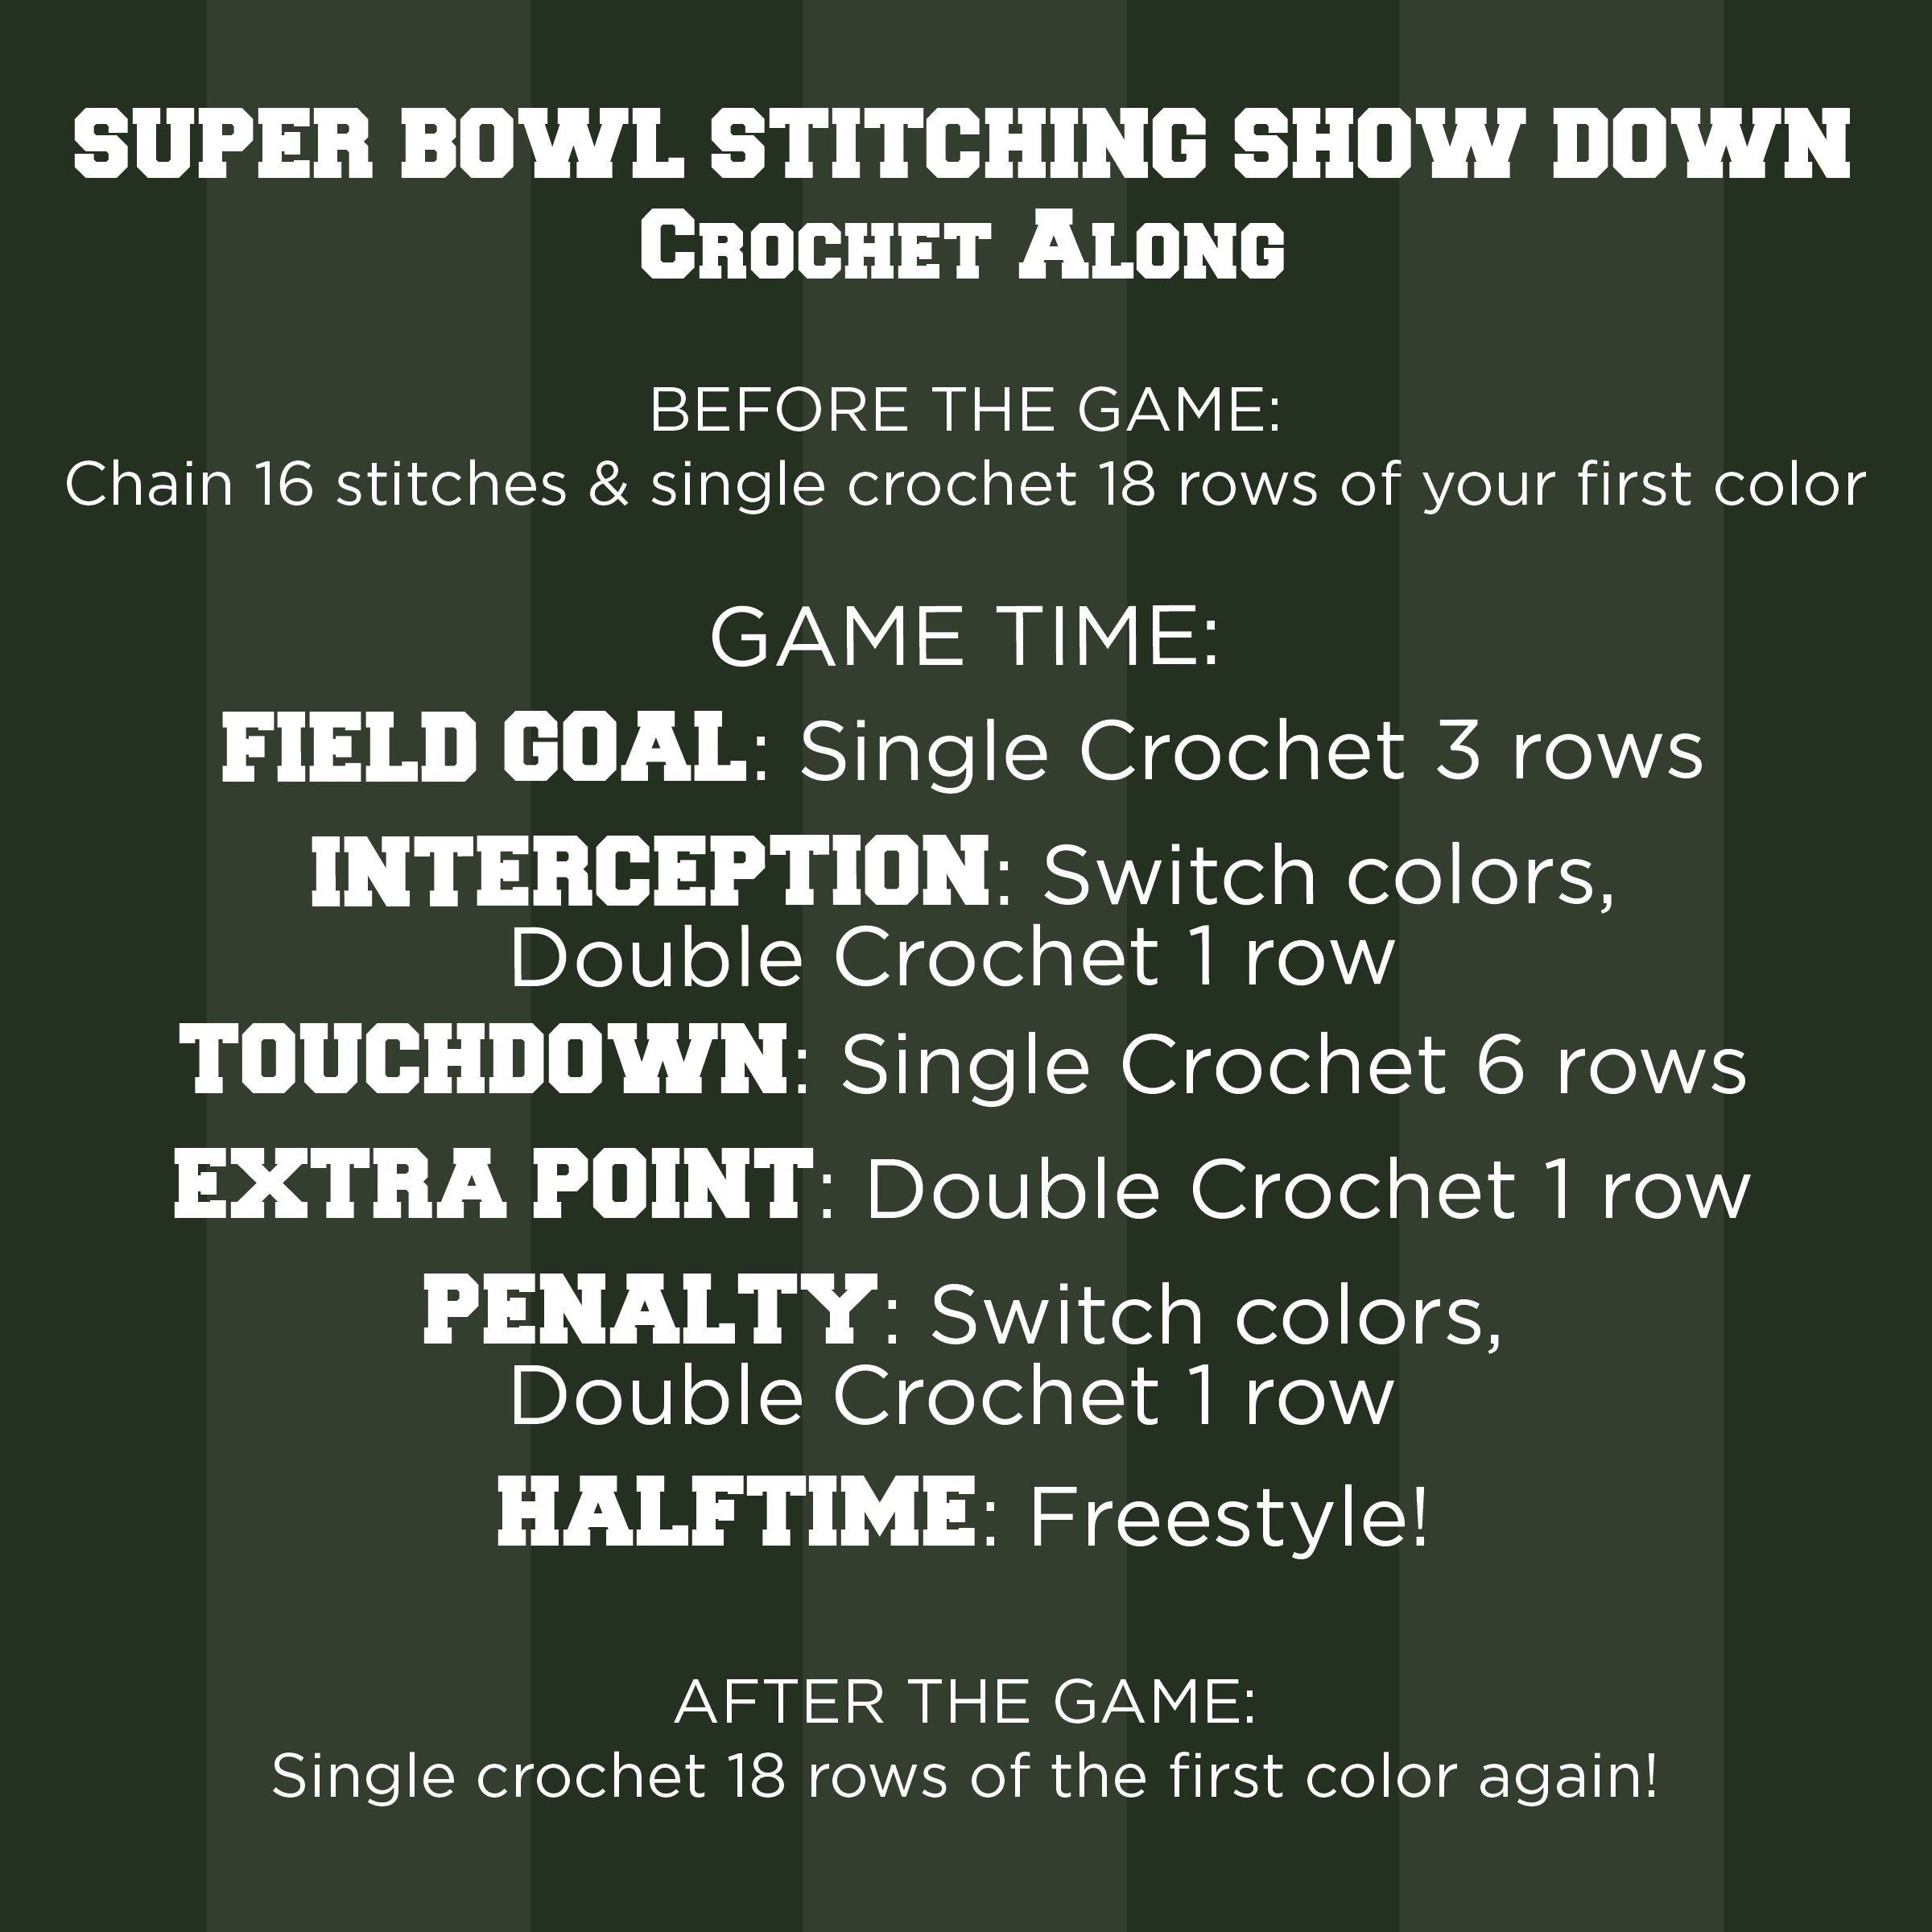 Super Bowl Stitching Show Down Crochet Along